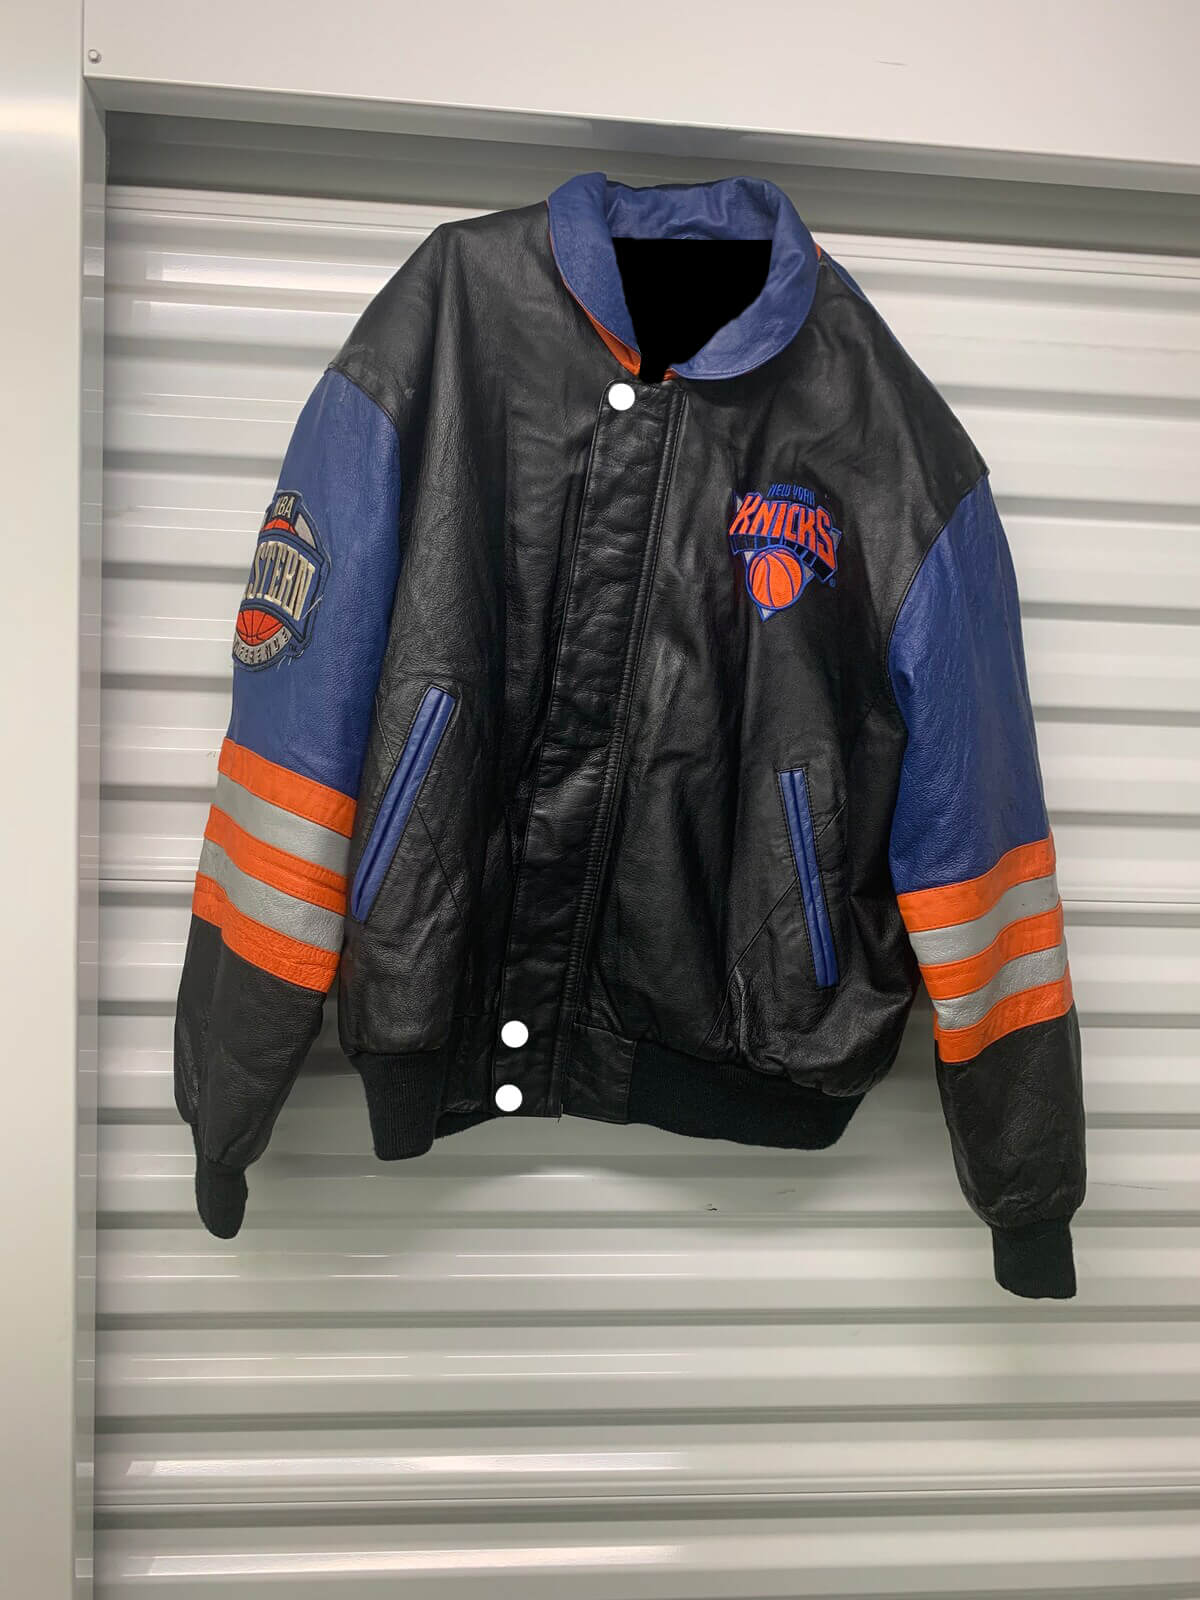 Jacket by Jeff Hamilton NY Knick's  Jackets, Celebrity jackets, Jacket  design